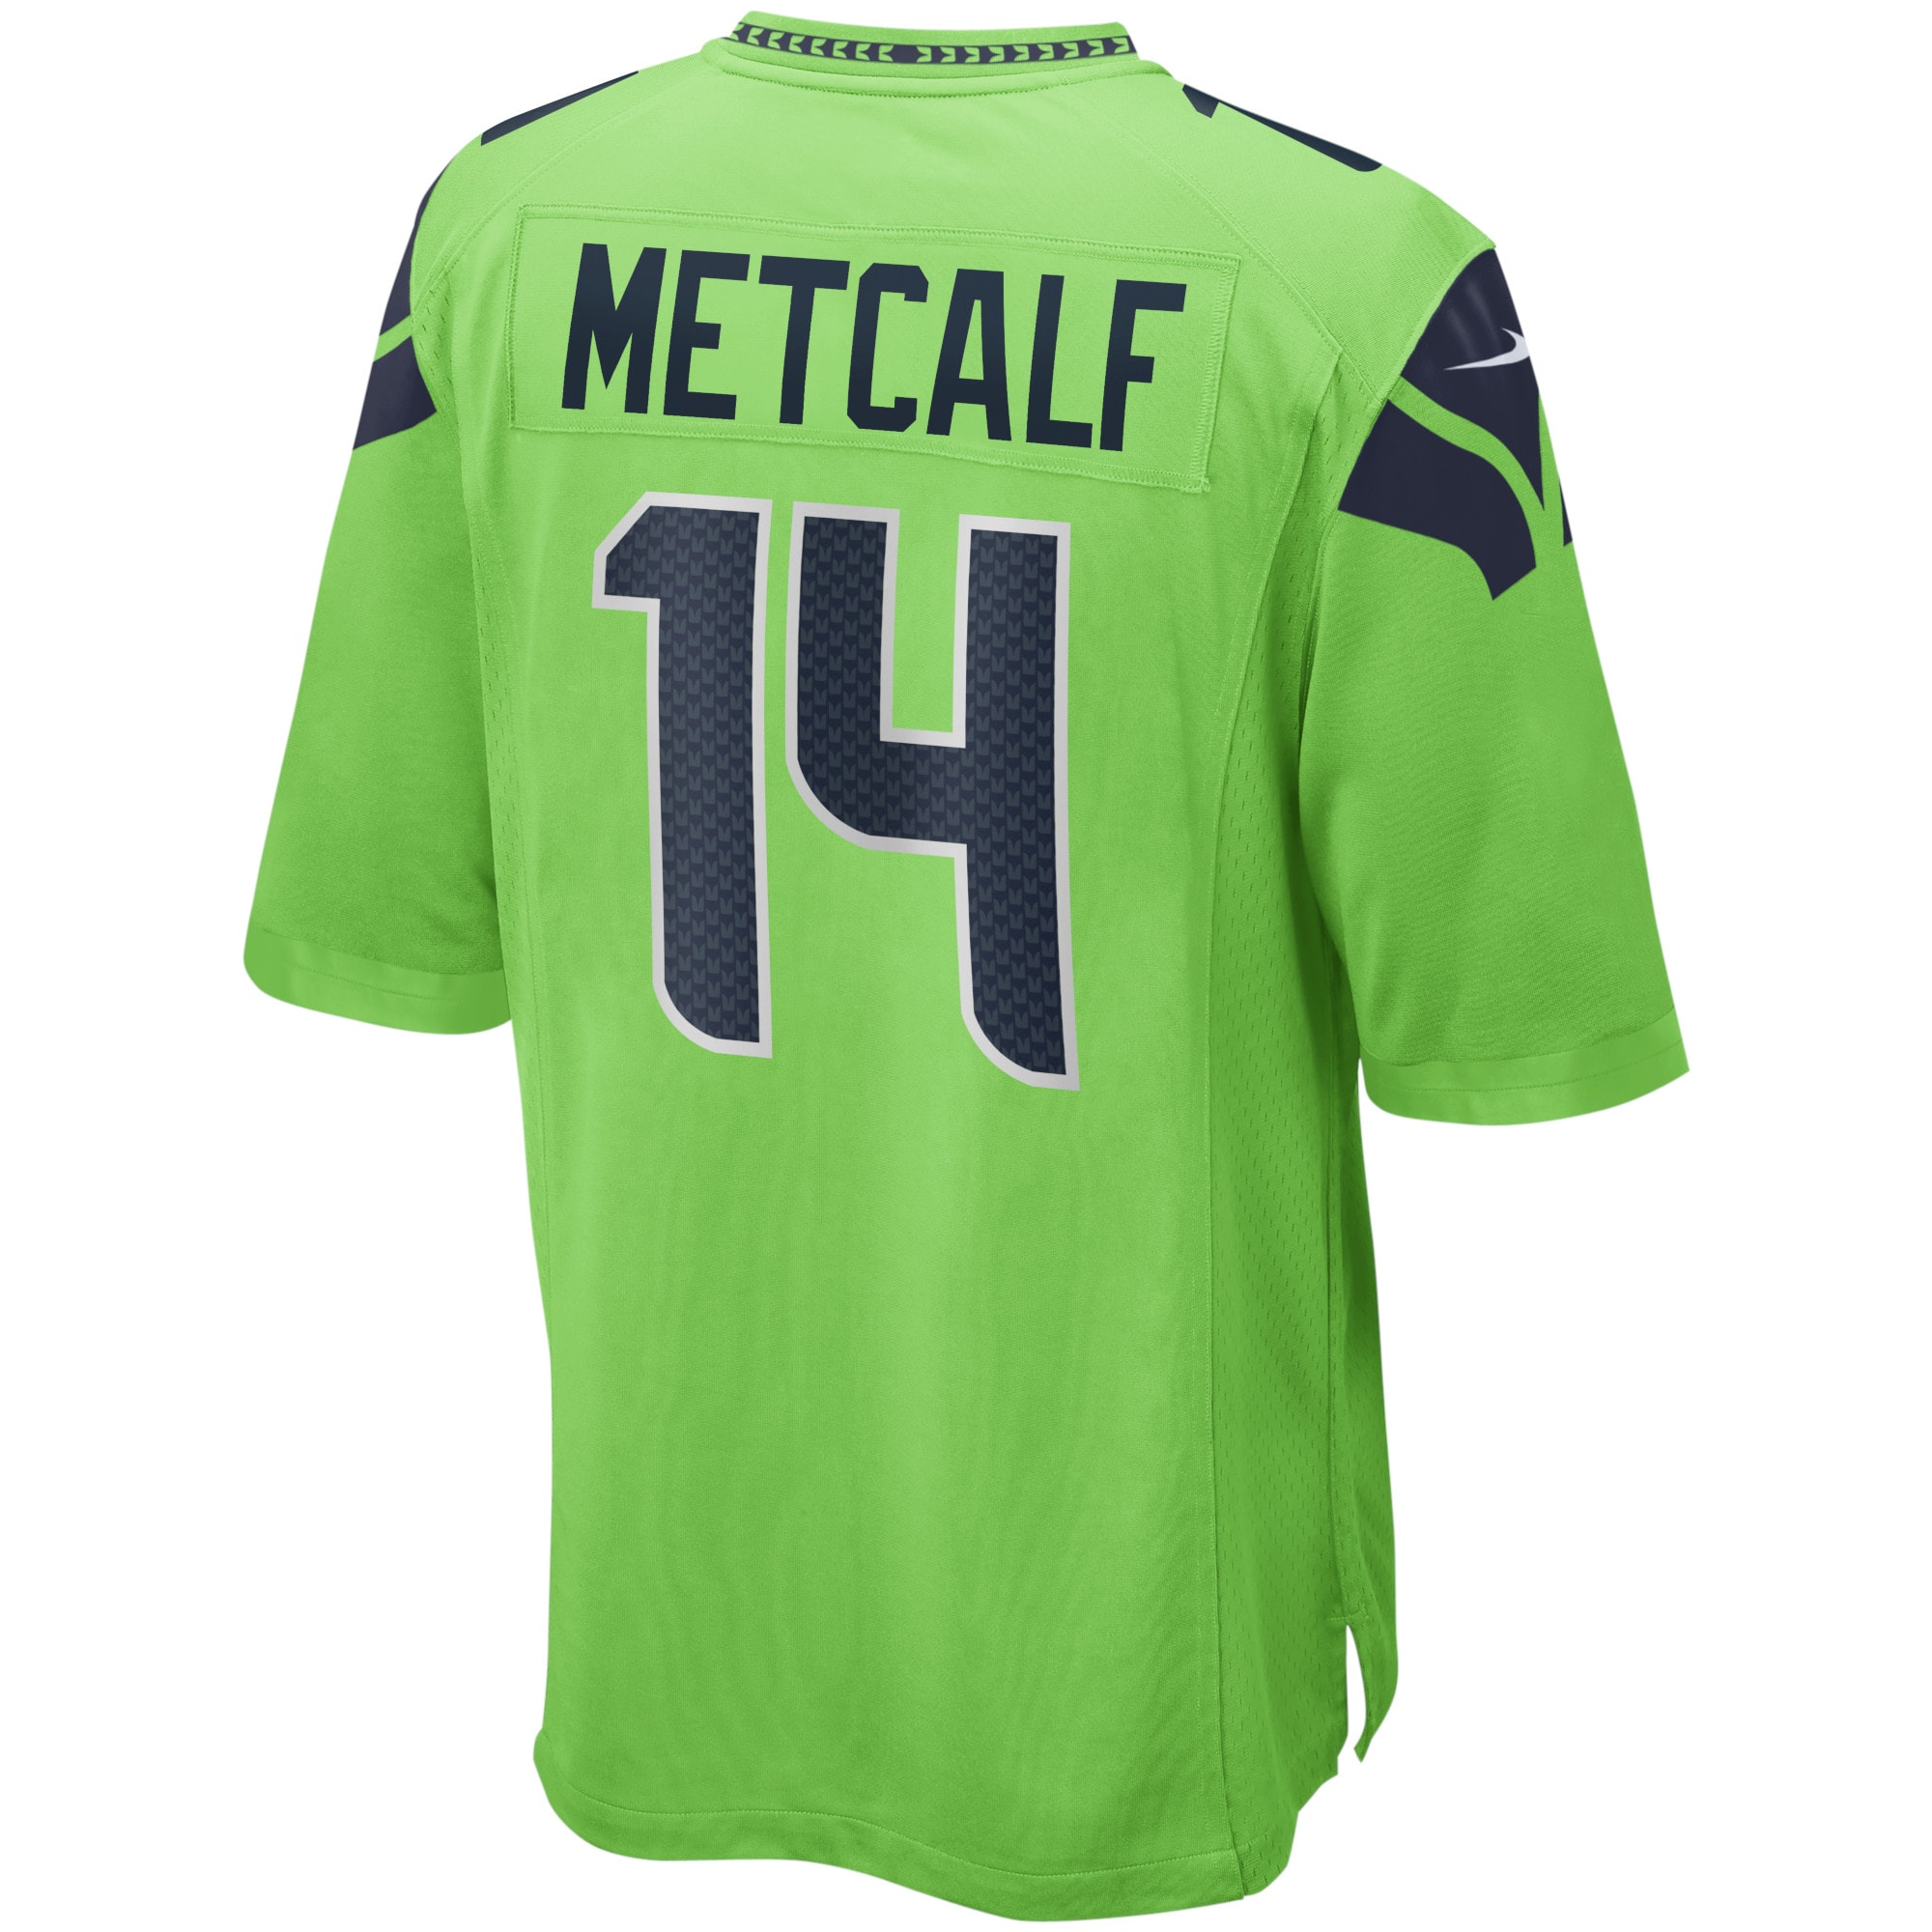 Men's Seattle Seahawks Jerseys Neon Green DK Metcalf Game Style